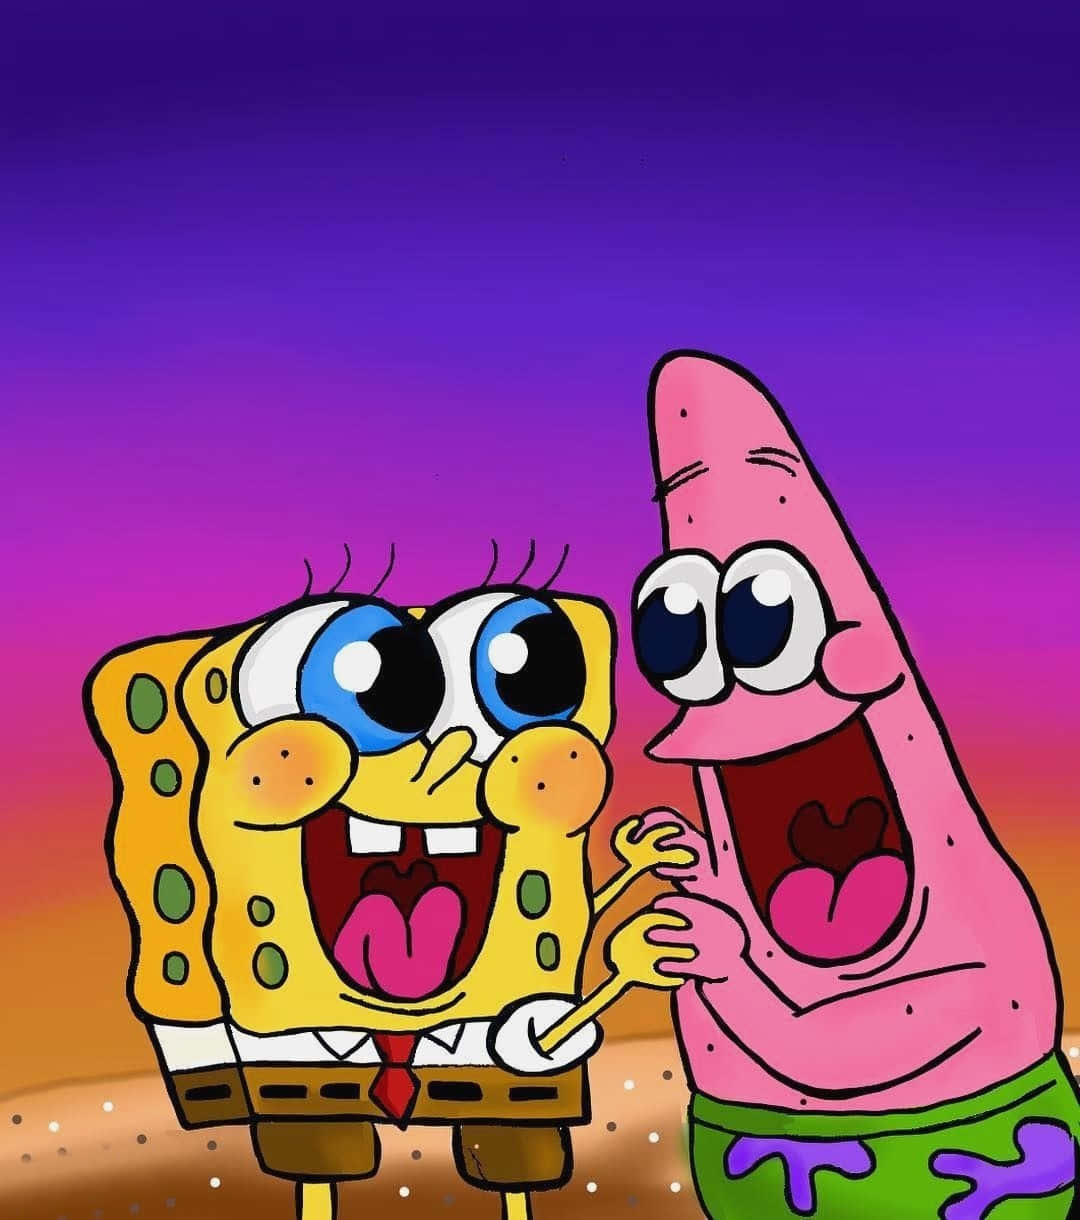 Patrick And SpongeBob Cheerful Aesthetic Wallpaper